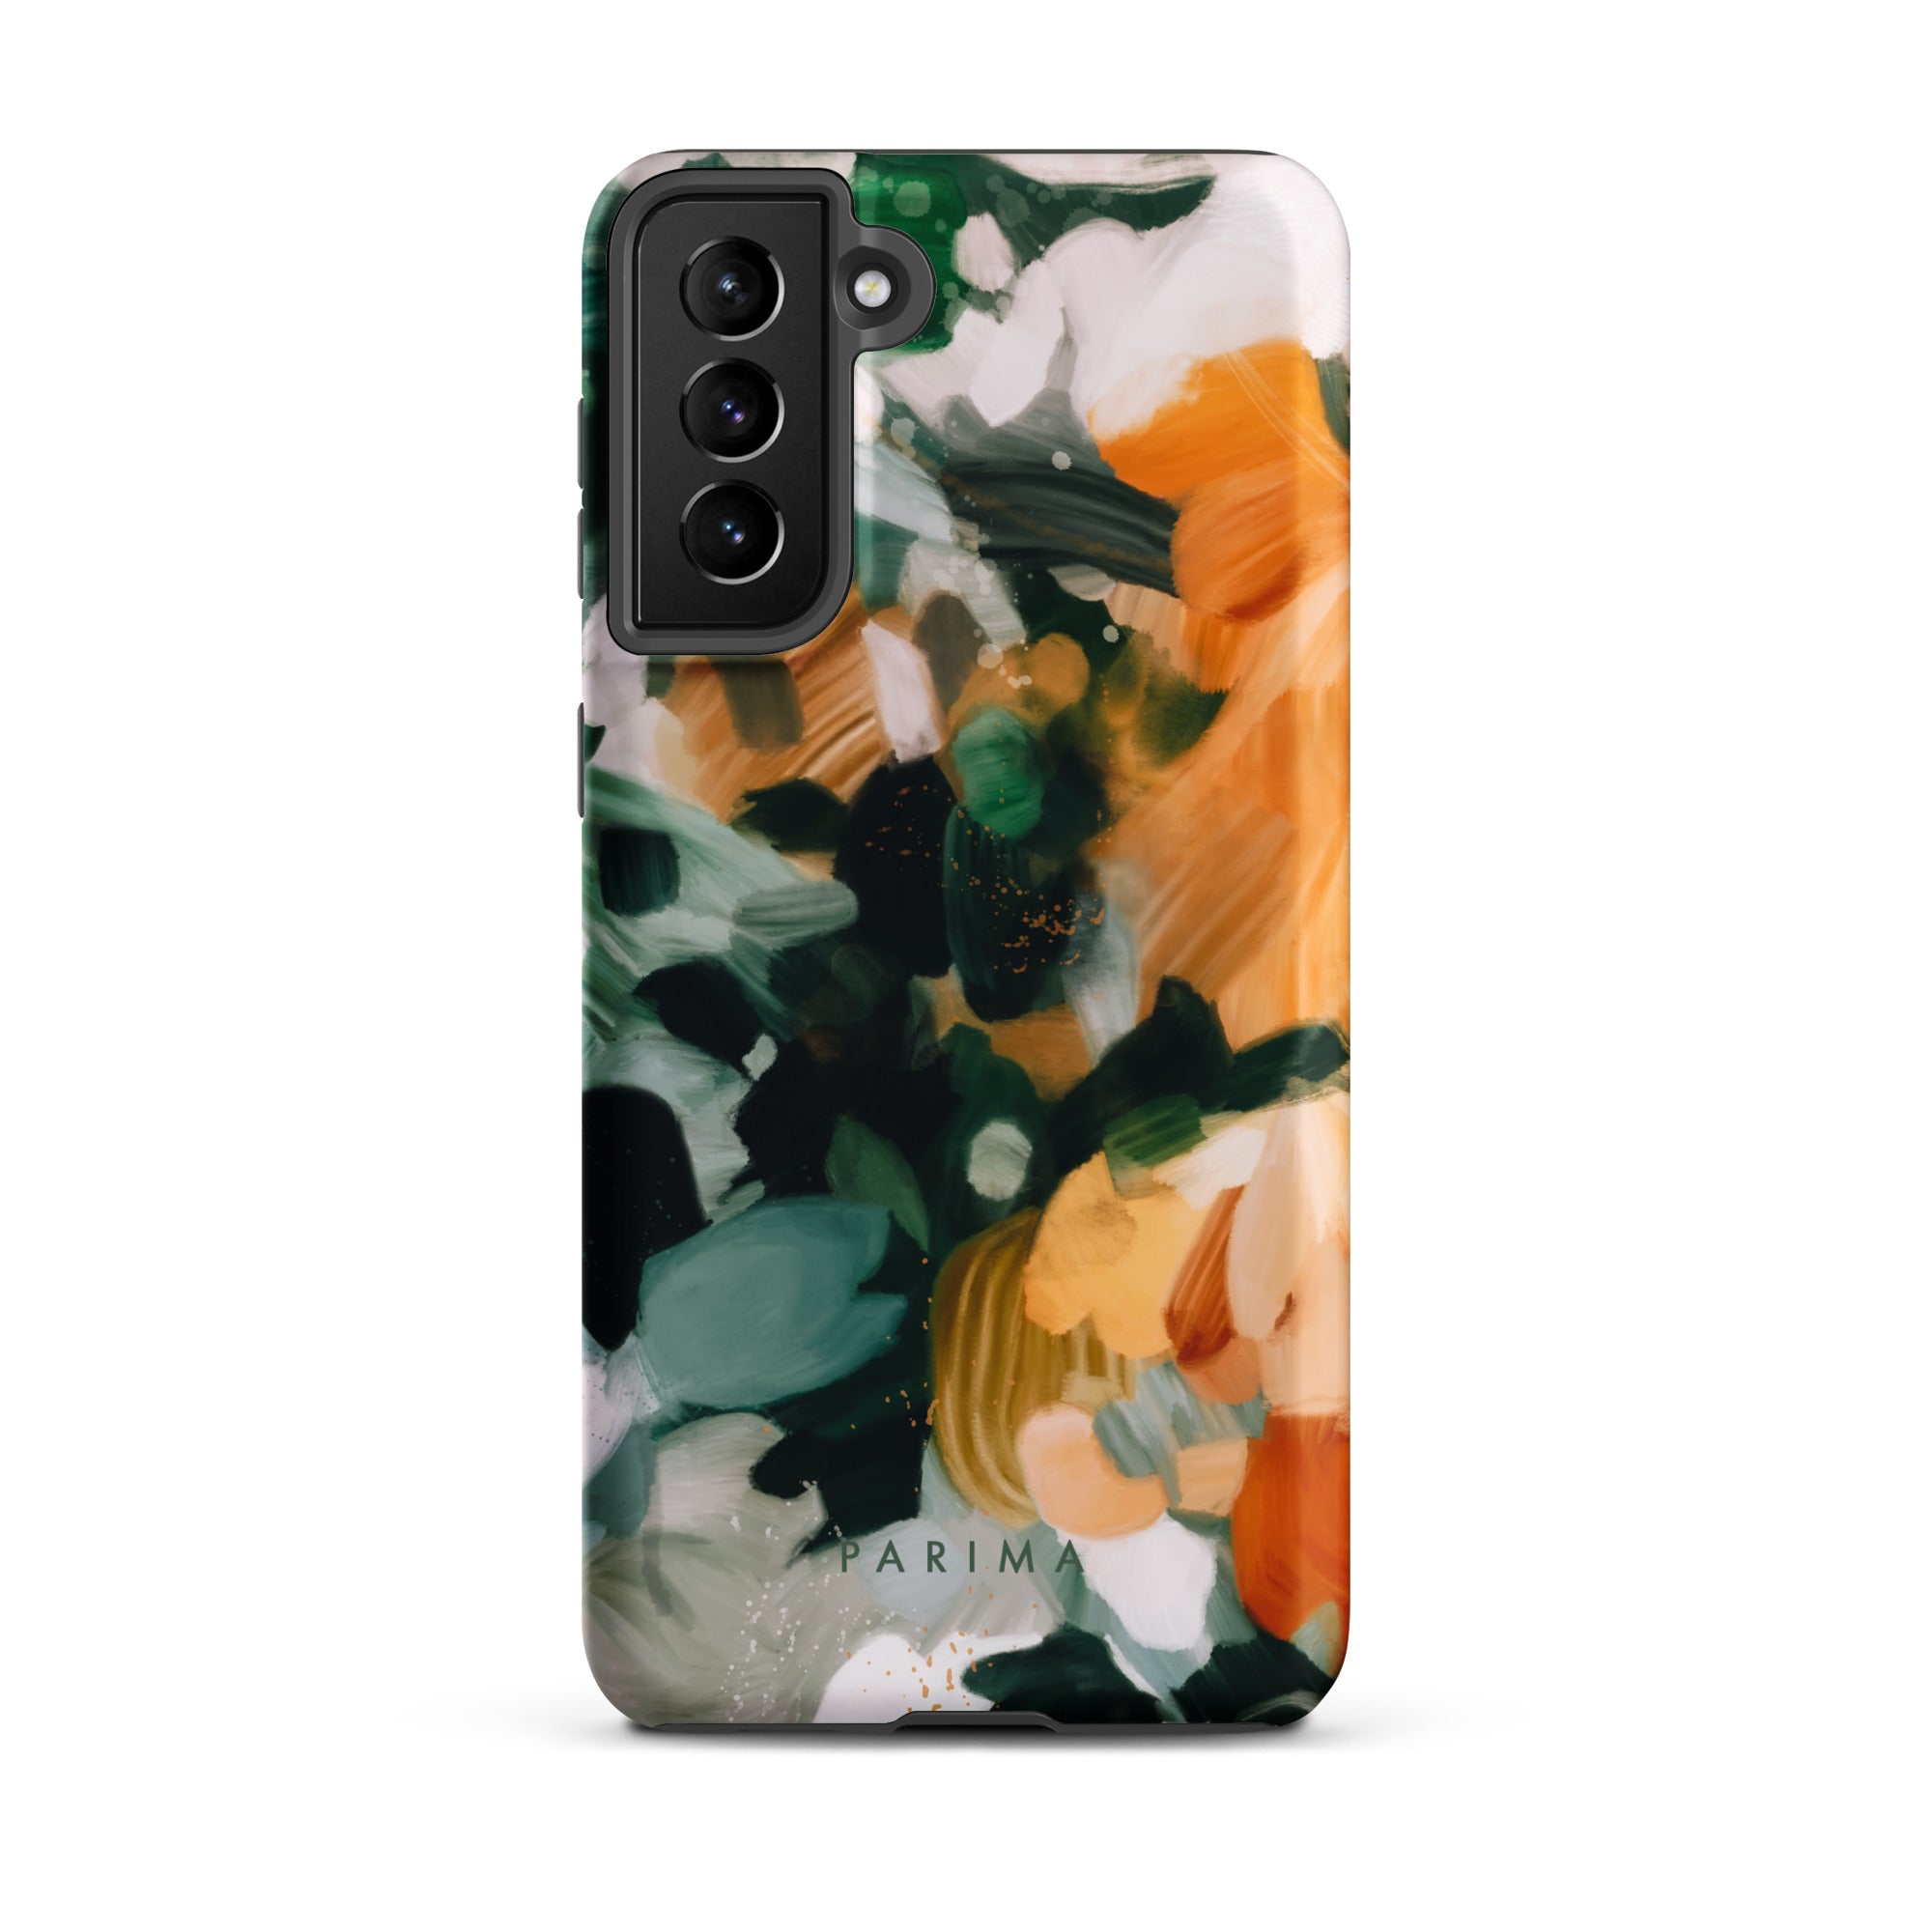 Aspen, green and orange abstract art on Samsung Galaxy S21 Plus tough case by Parima Studio